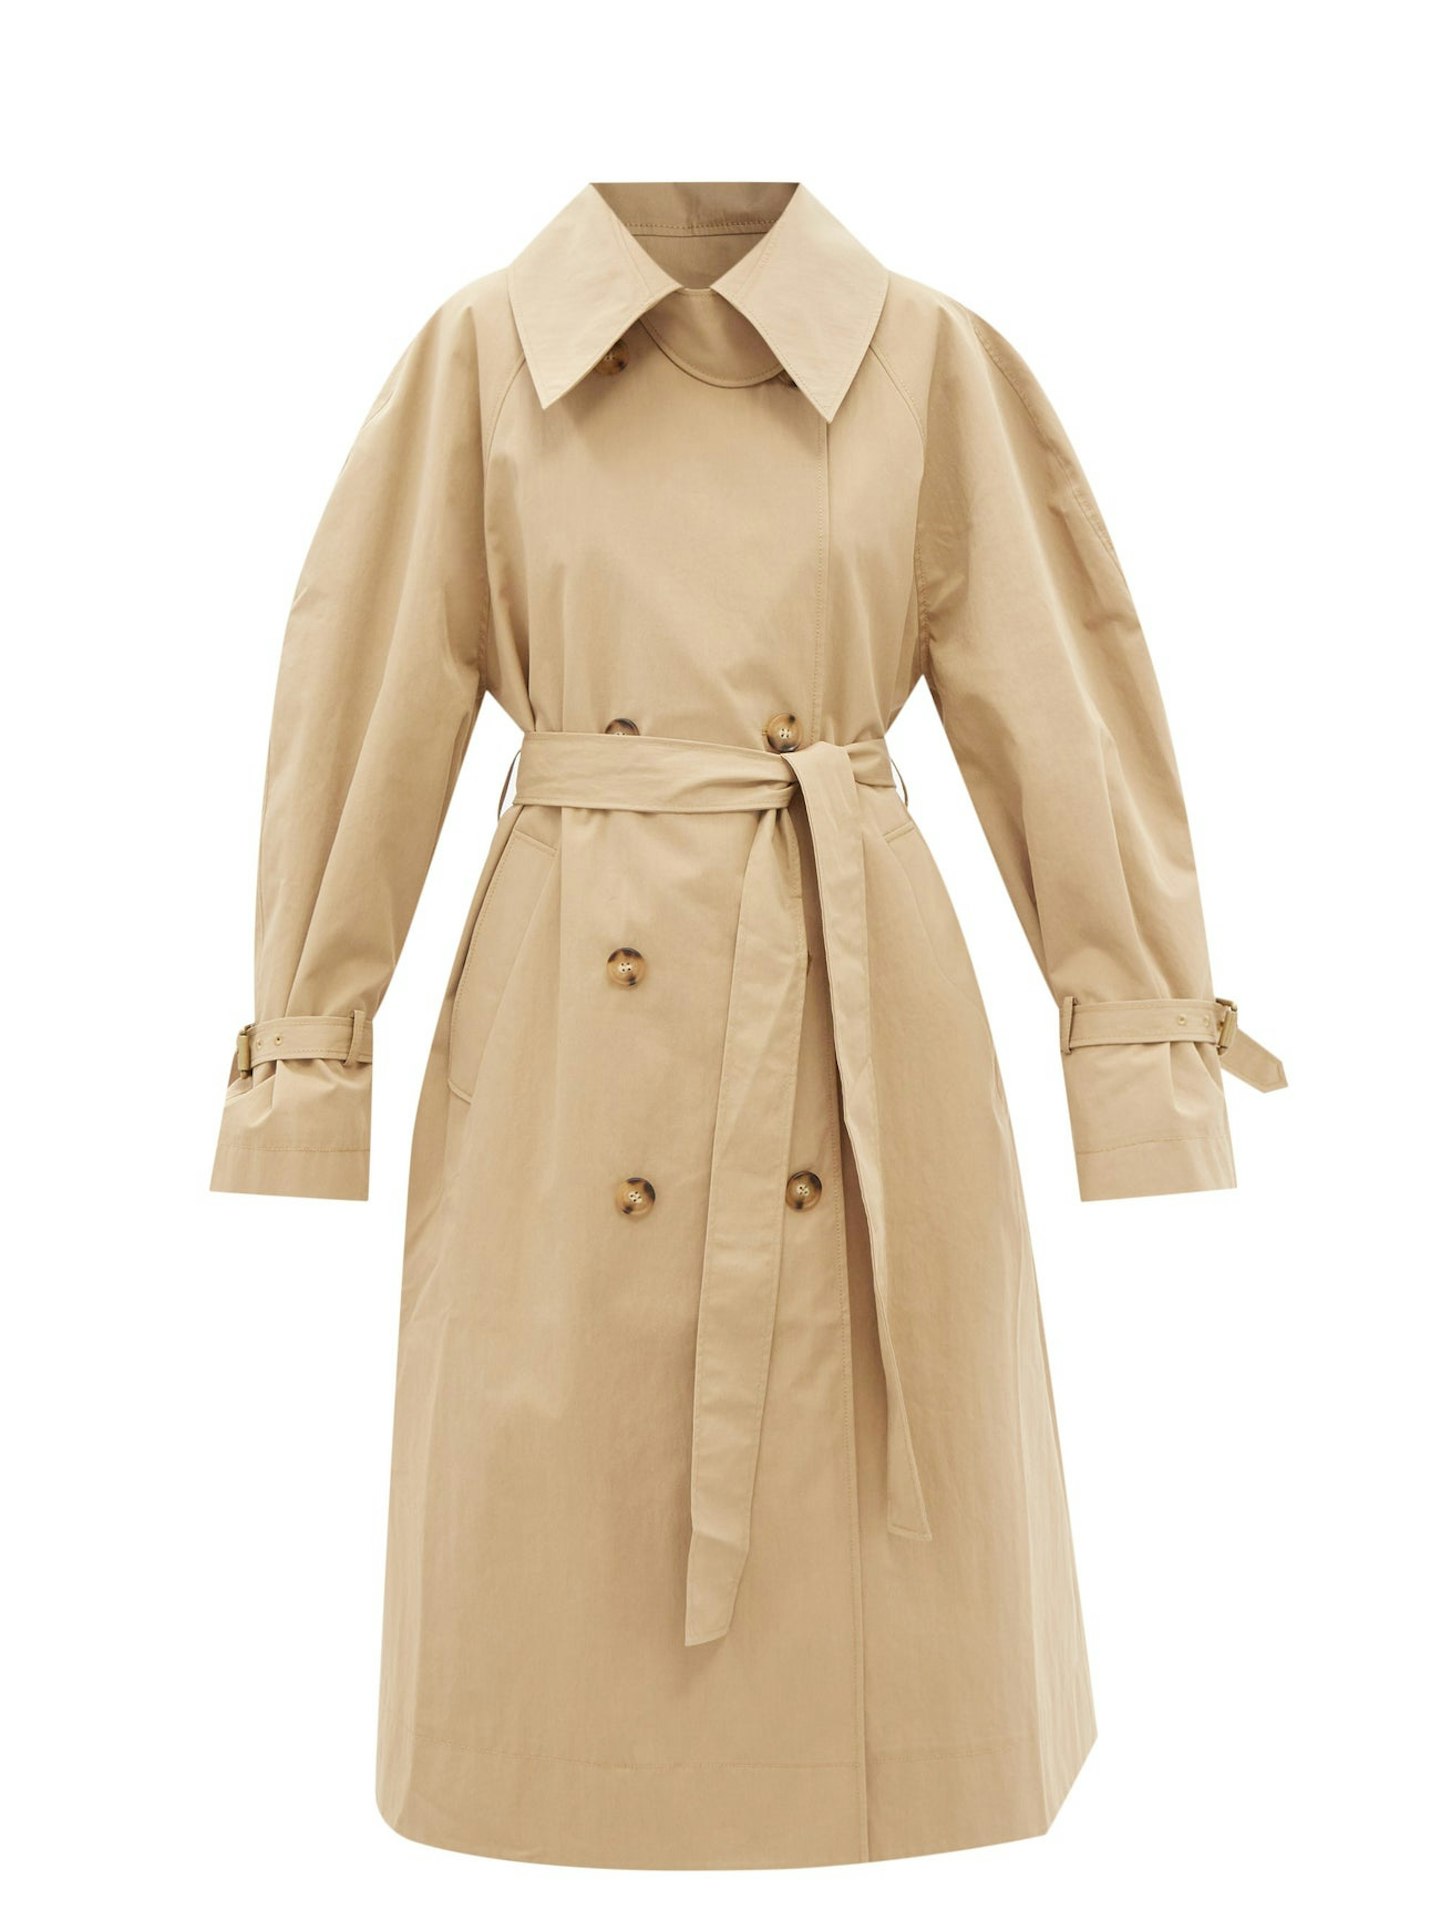 Rejina Pyo, Romy cotton-blend twill trench coat, £695